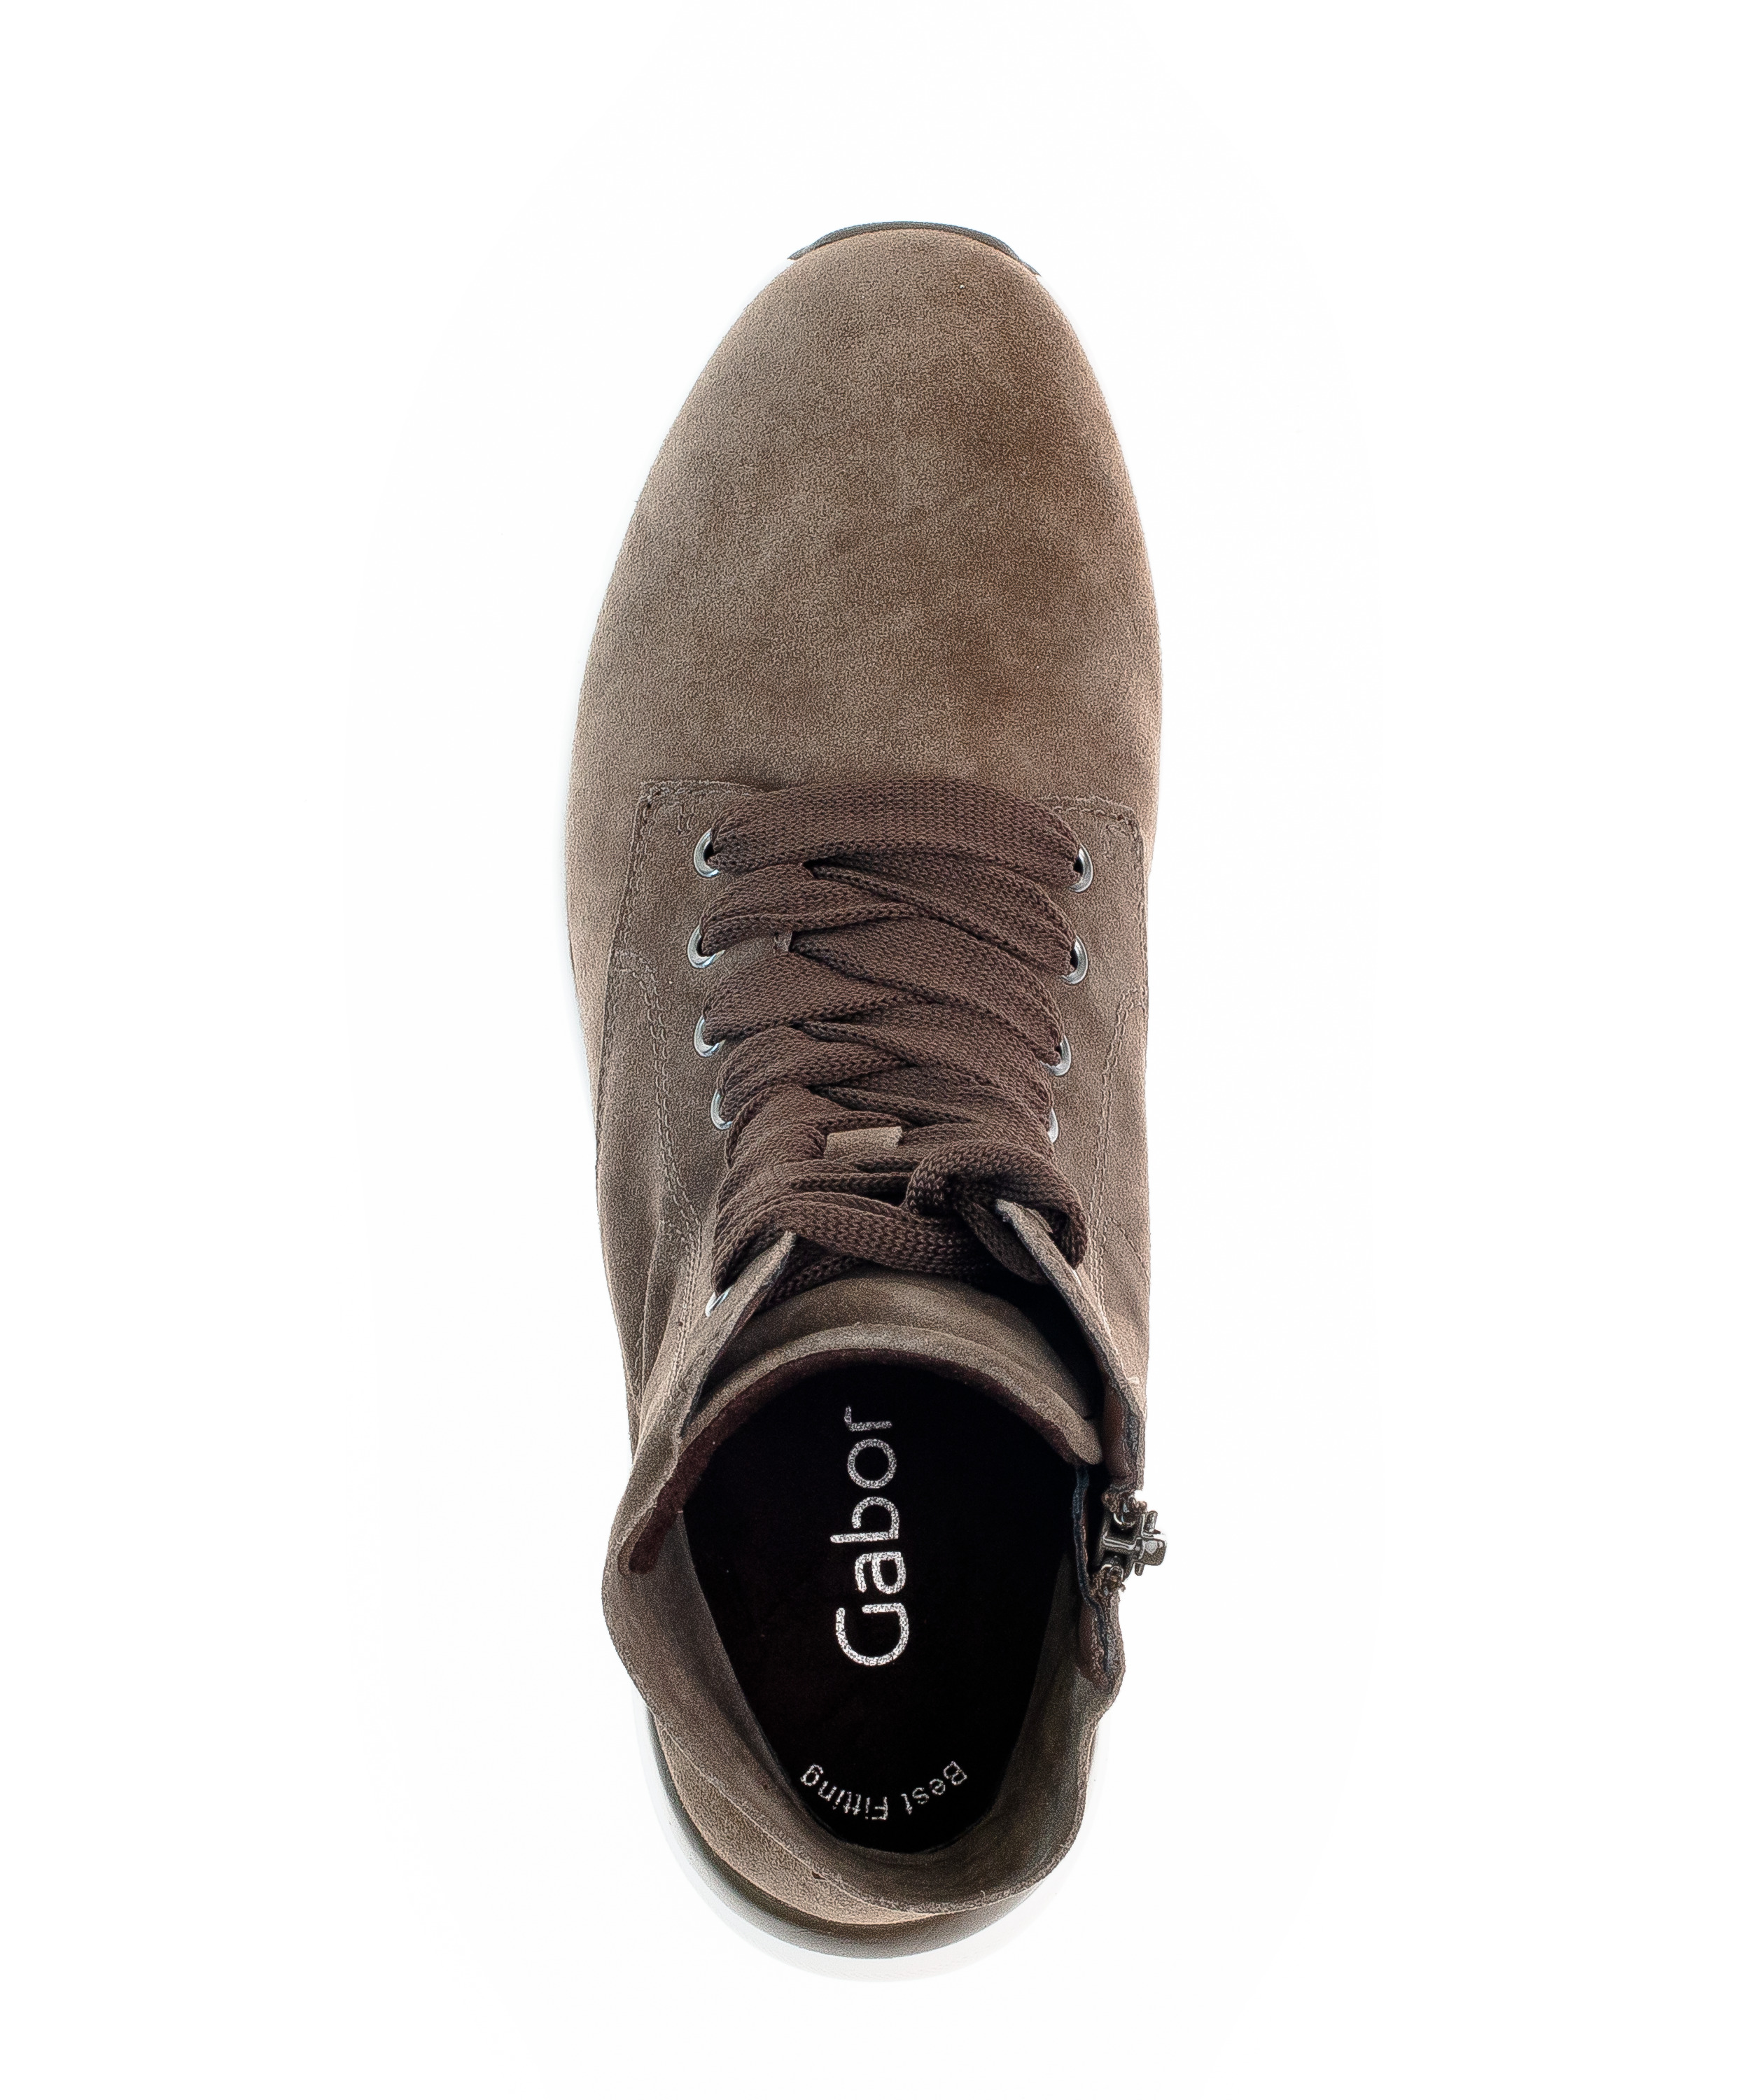 Gabor Shoes 73.740.19 Gabor Sport Brown Veloursleder suede leather